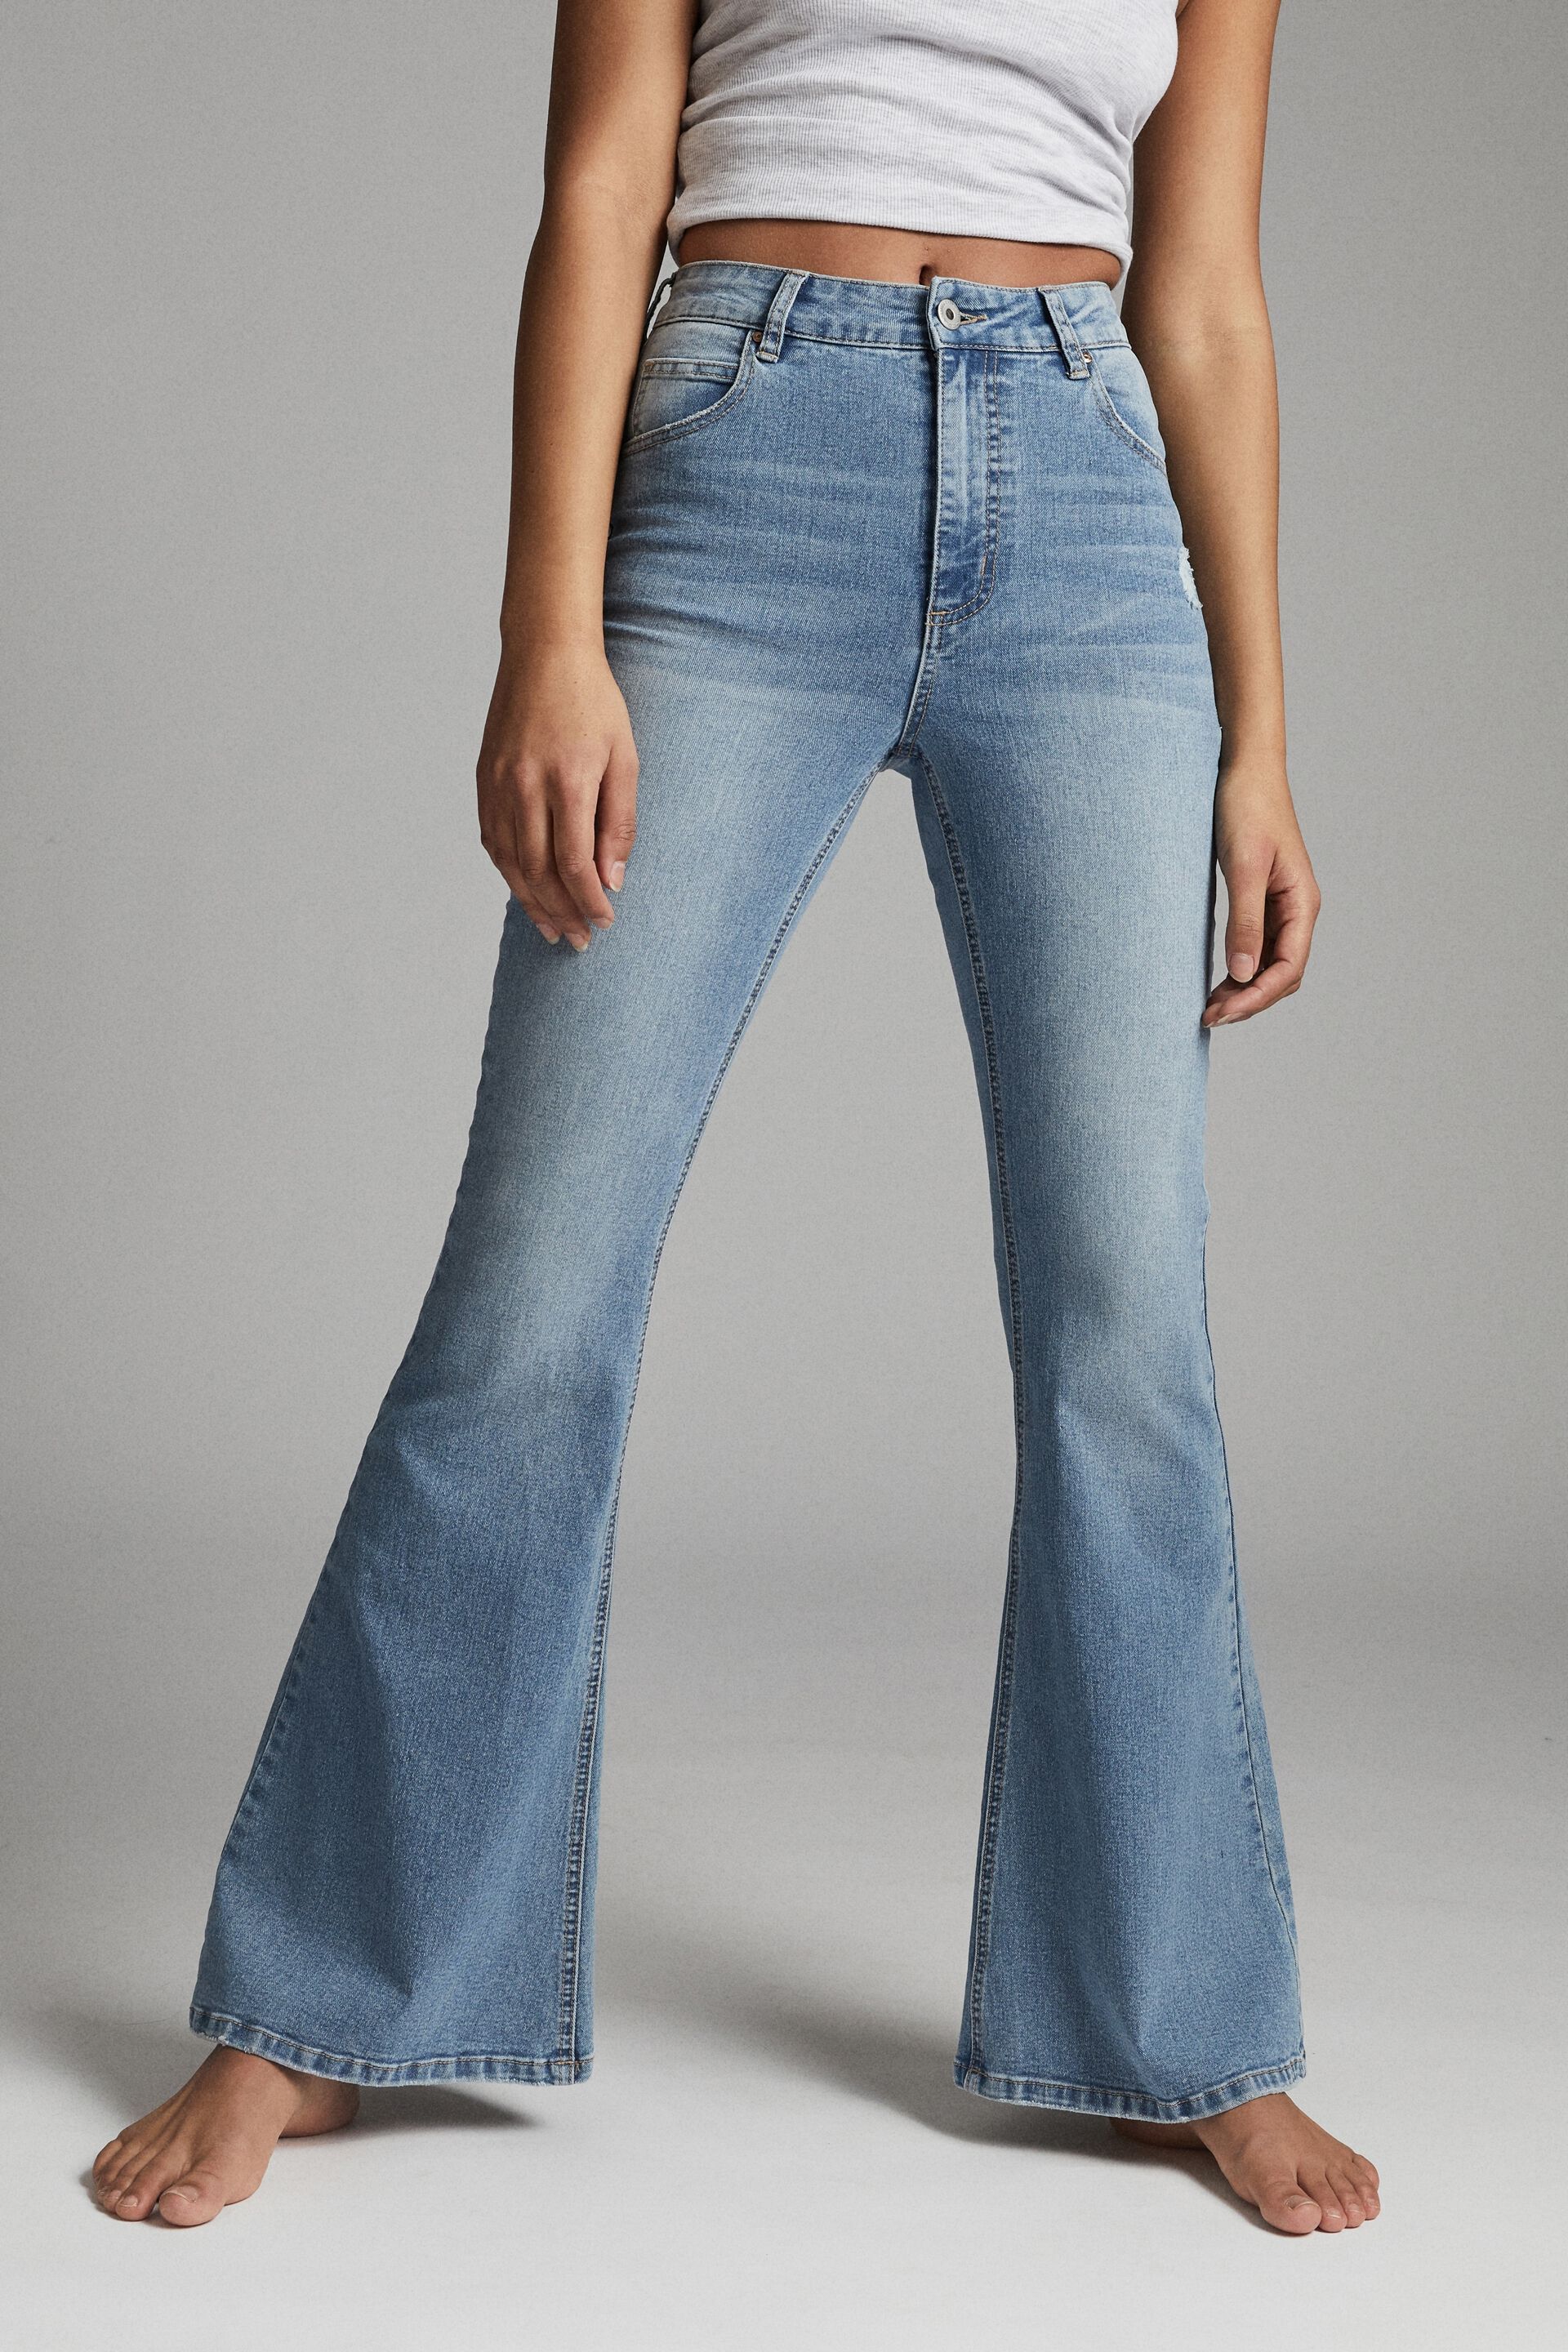 harley davidson womens jeans